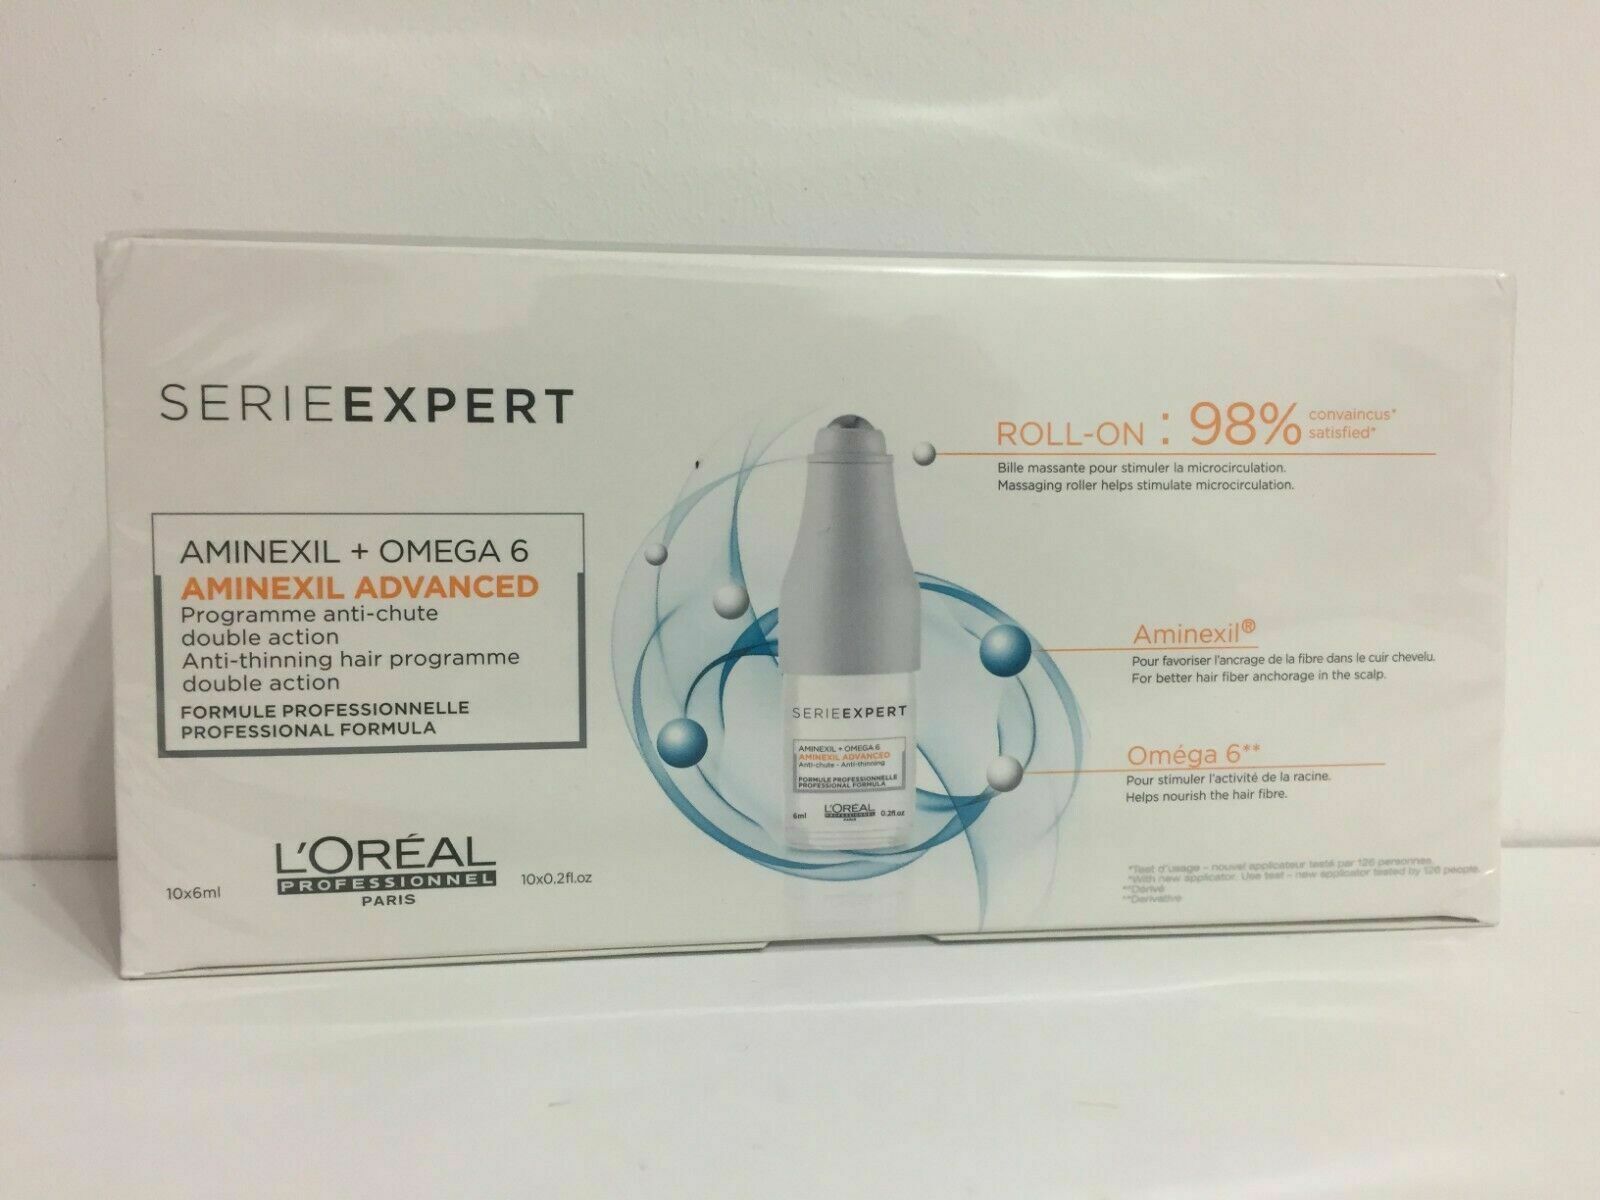 L'Oreal Expert Serie Advanced Omega 6 - 10 x 6ml - Hair Loss Treatment - $59.99